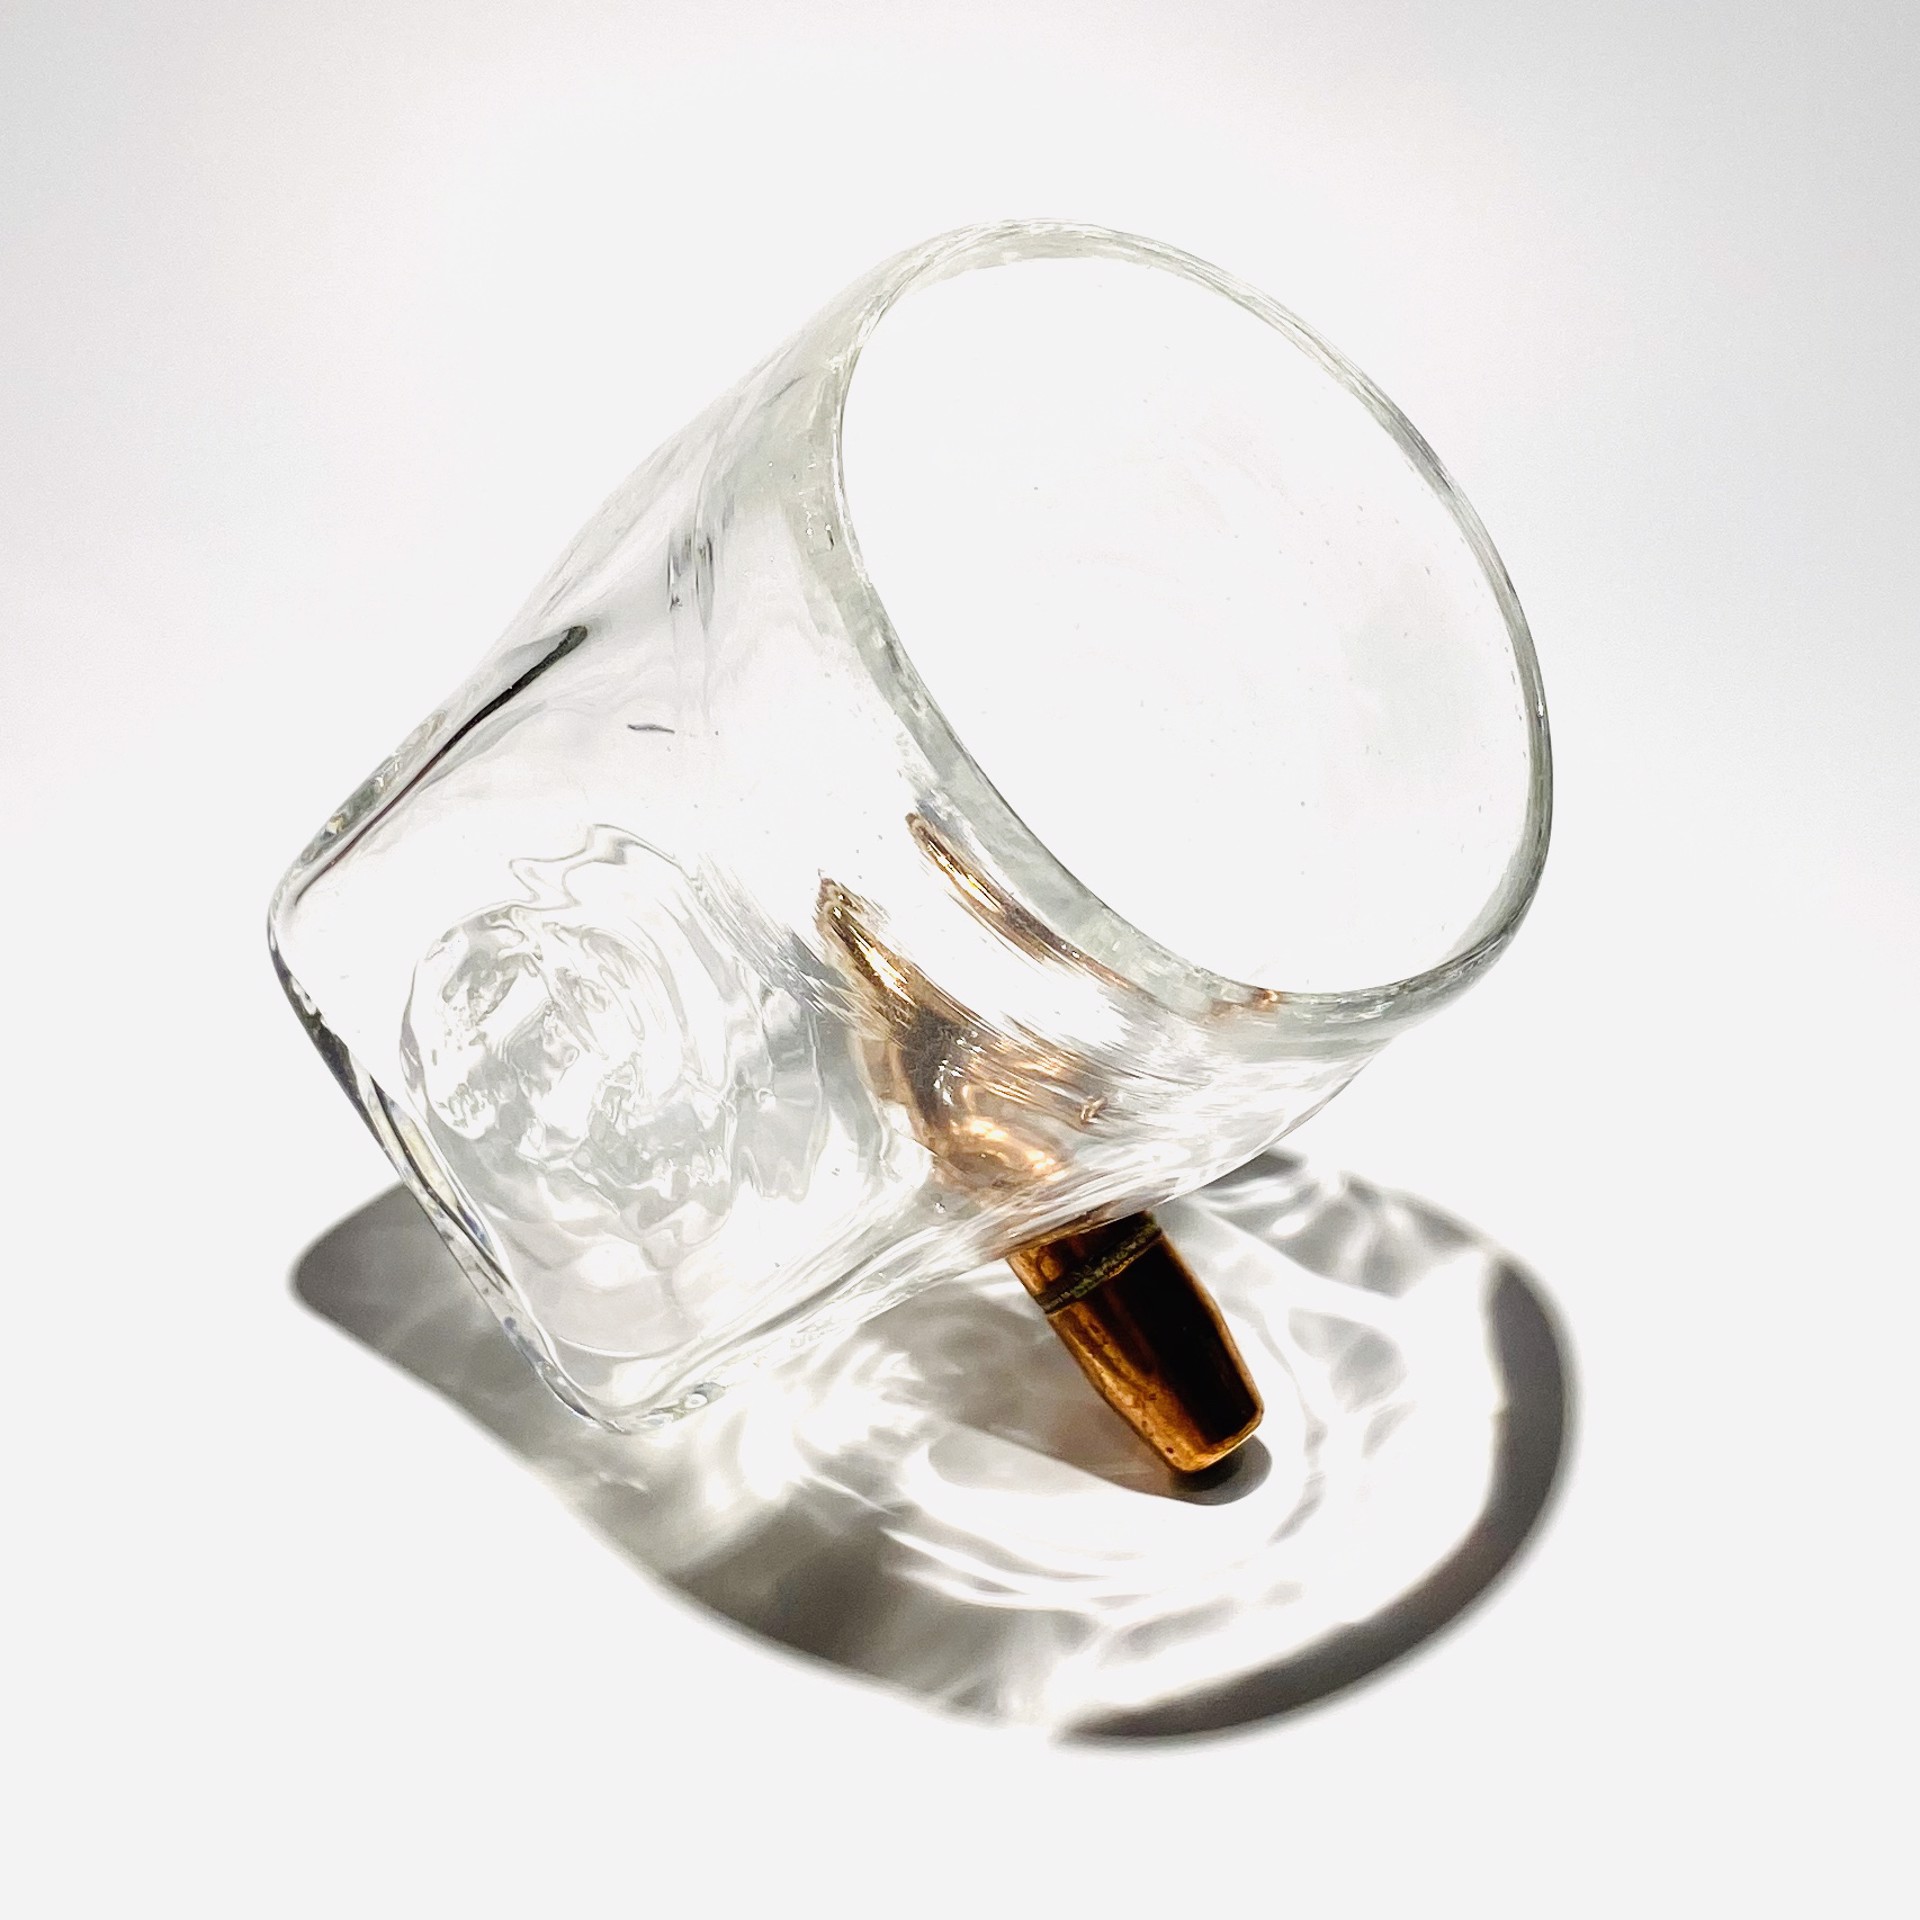 Whiskey "Shot" Glass, JG1 by John Glass